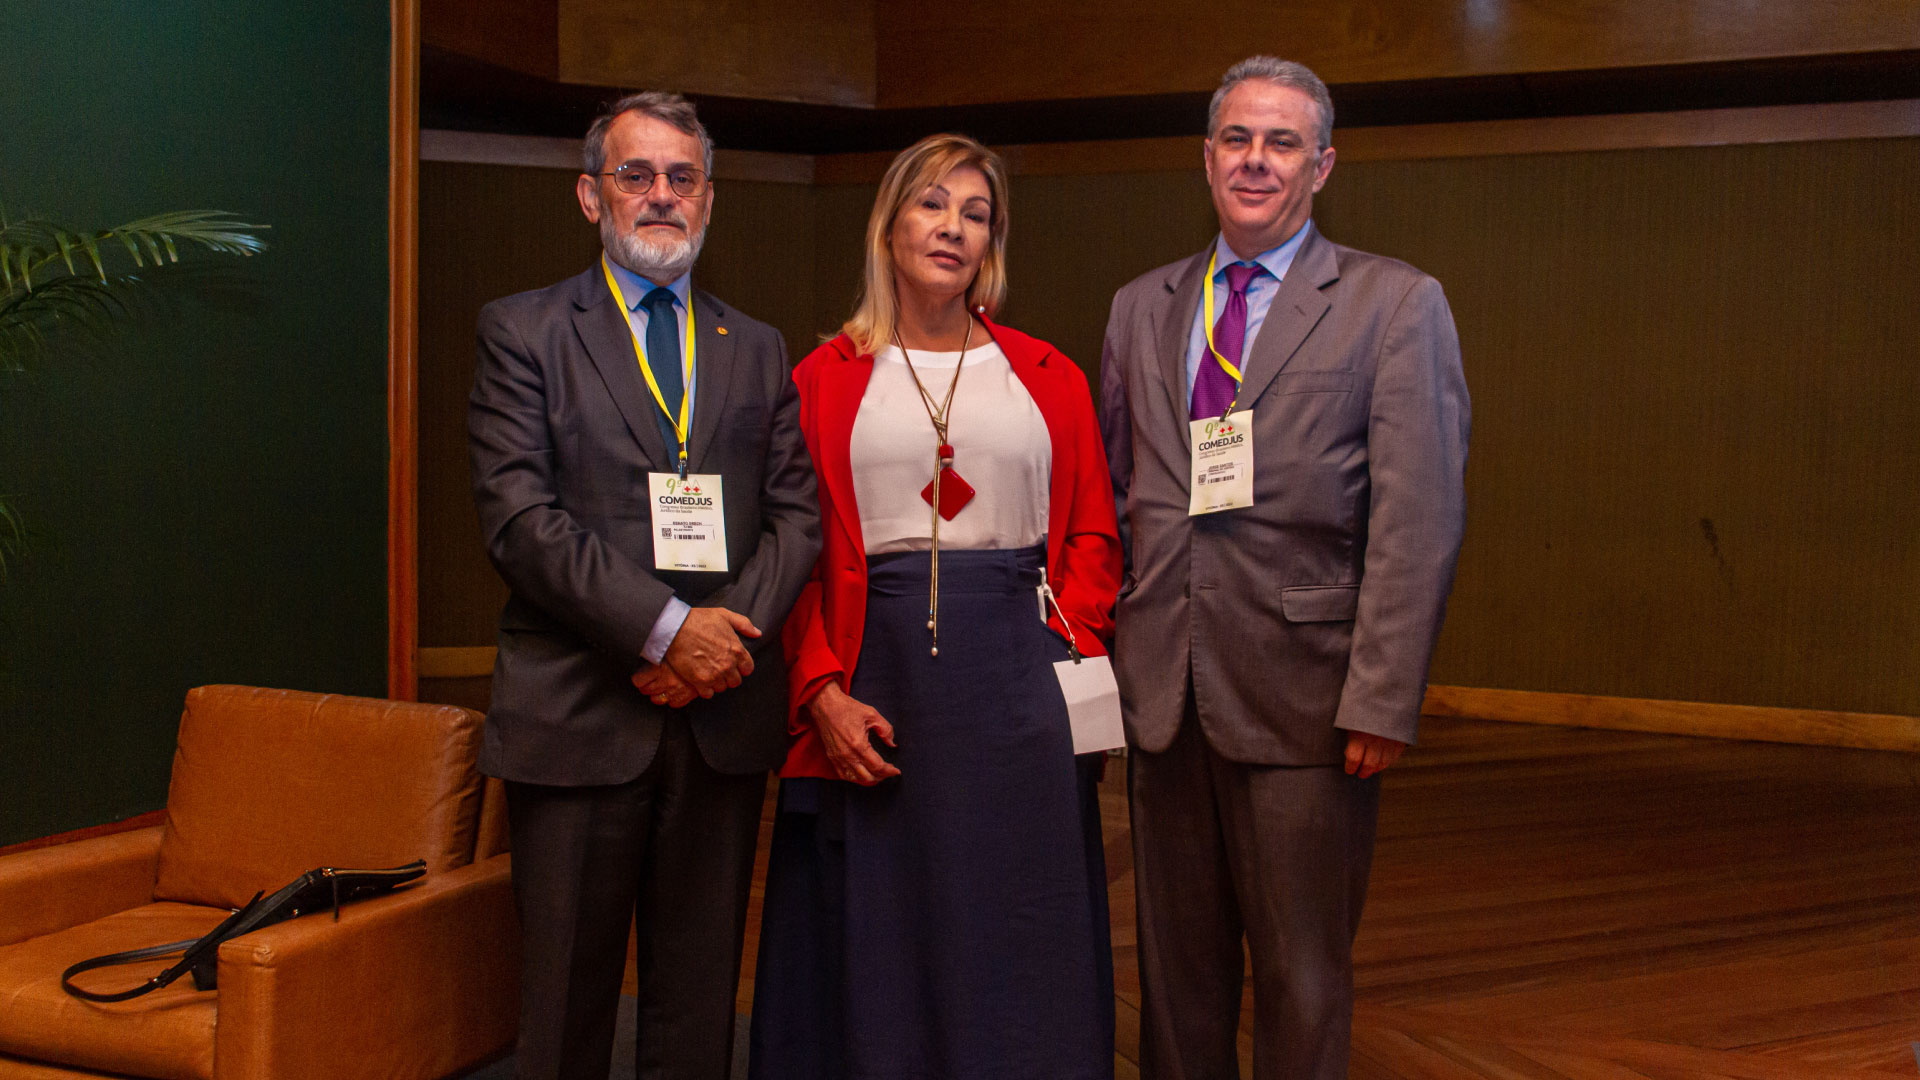 9 congresso brasileiro medico juridico da saude 7